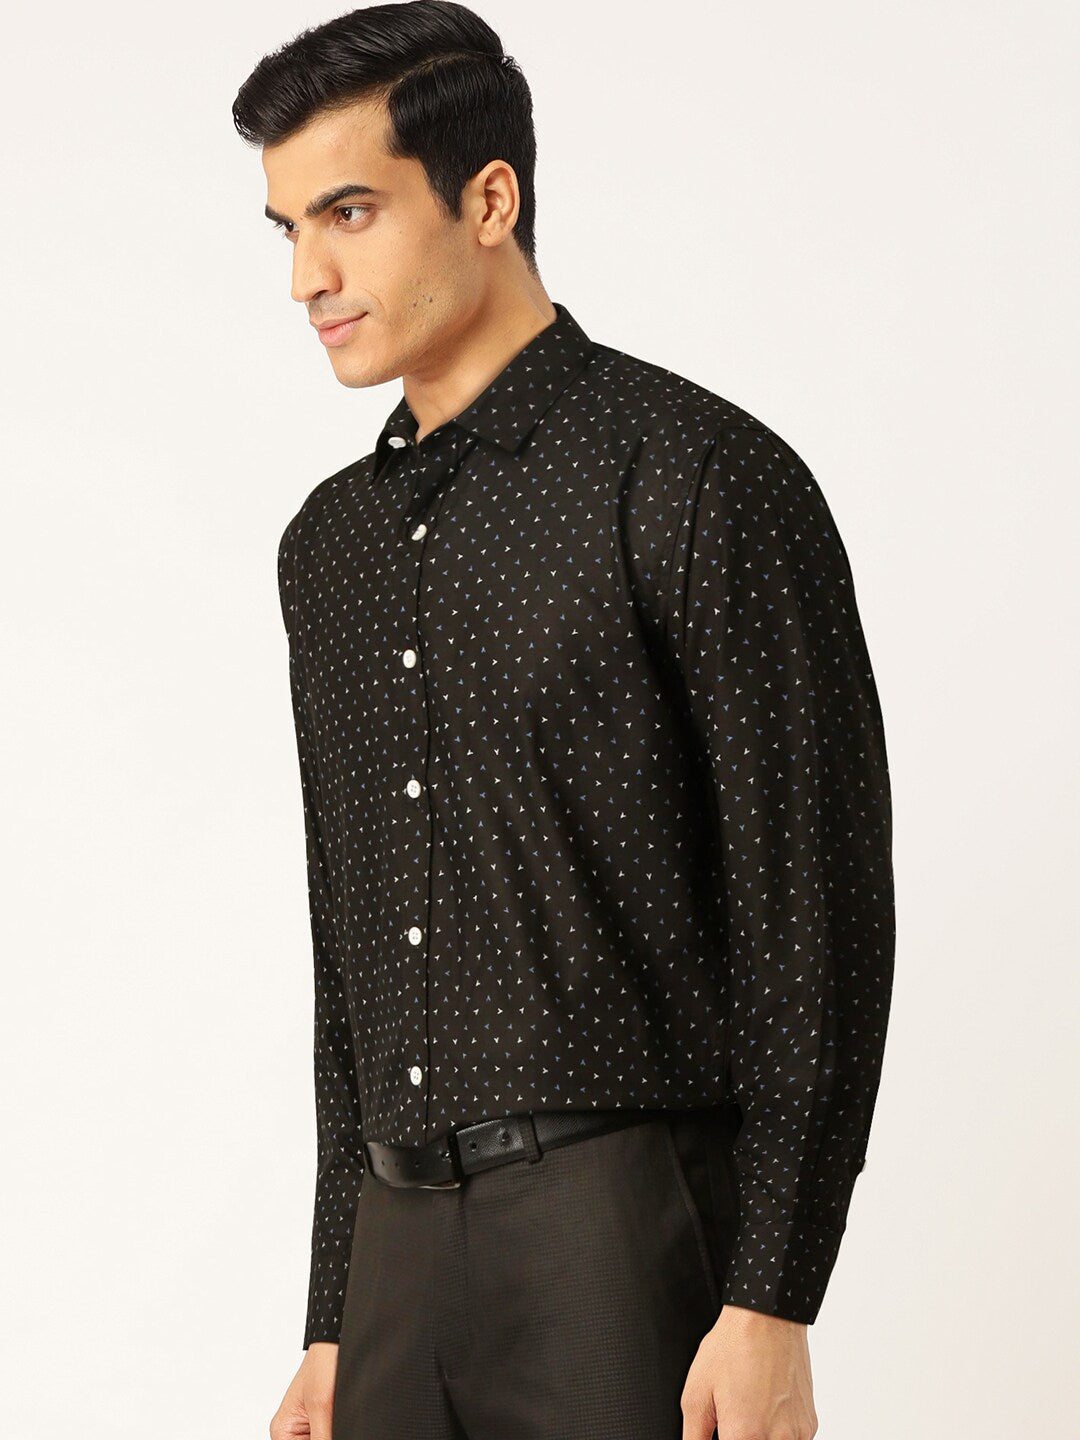 Men's Black Cotton Printed Formal Shirts ( SF 716Black ) - Jainish